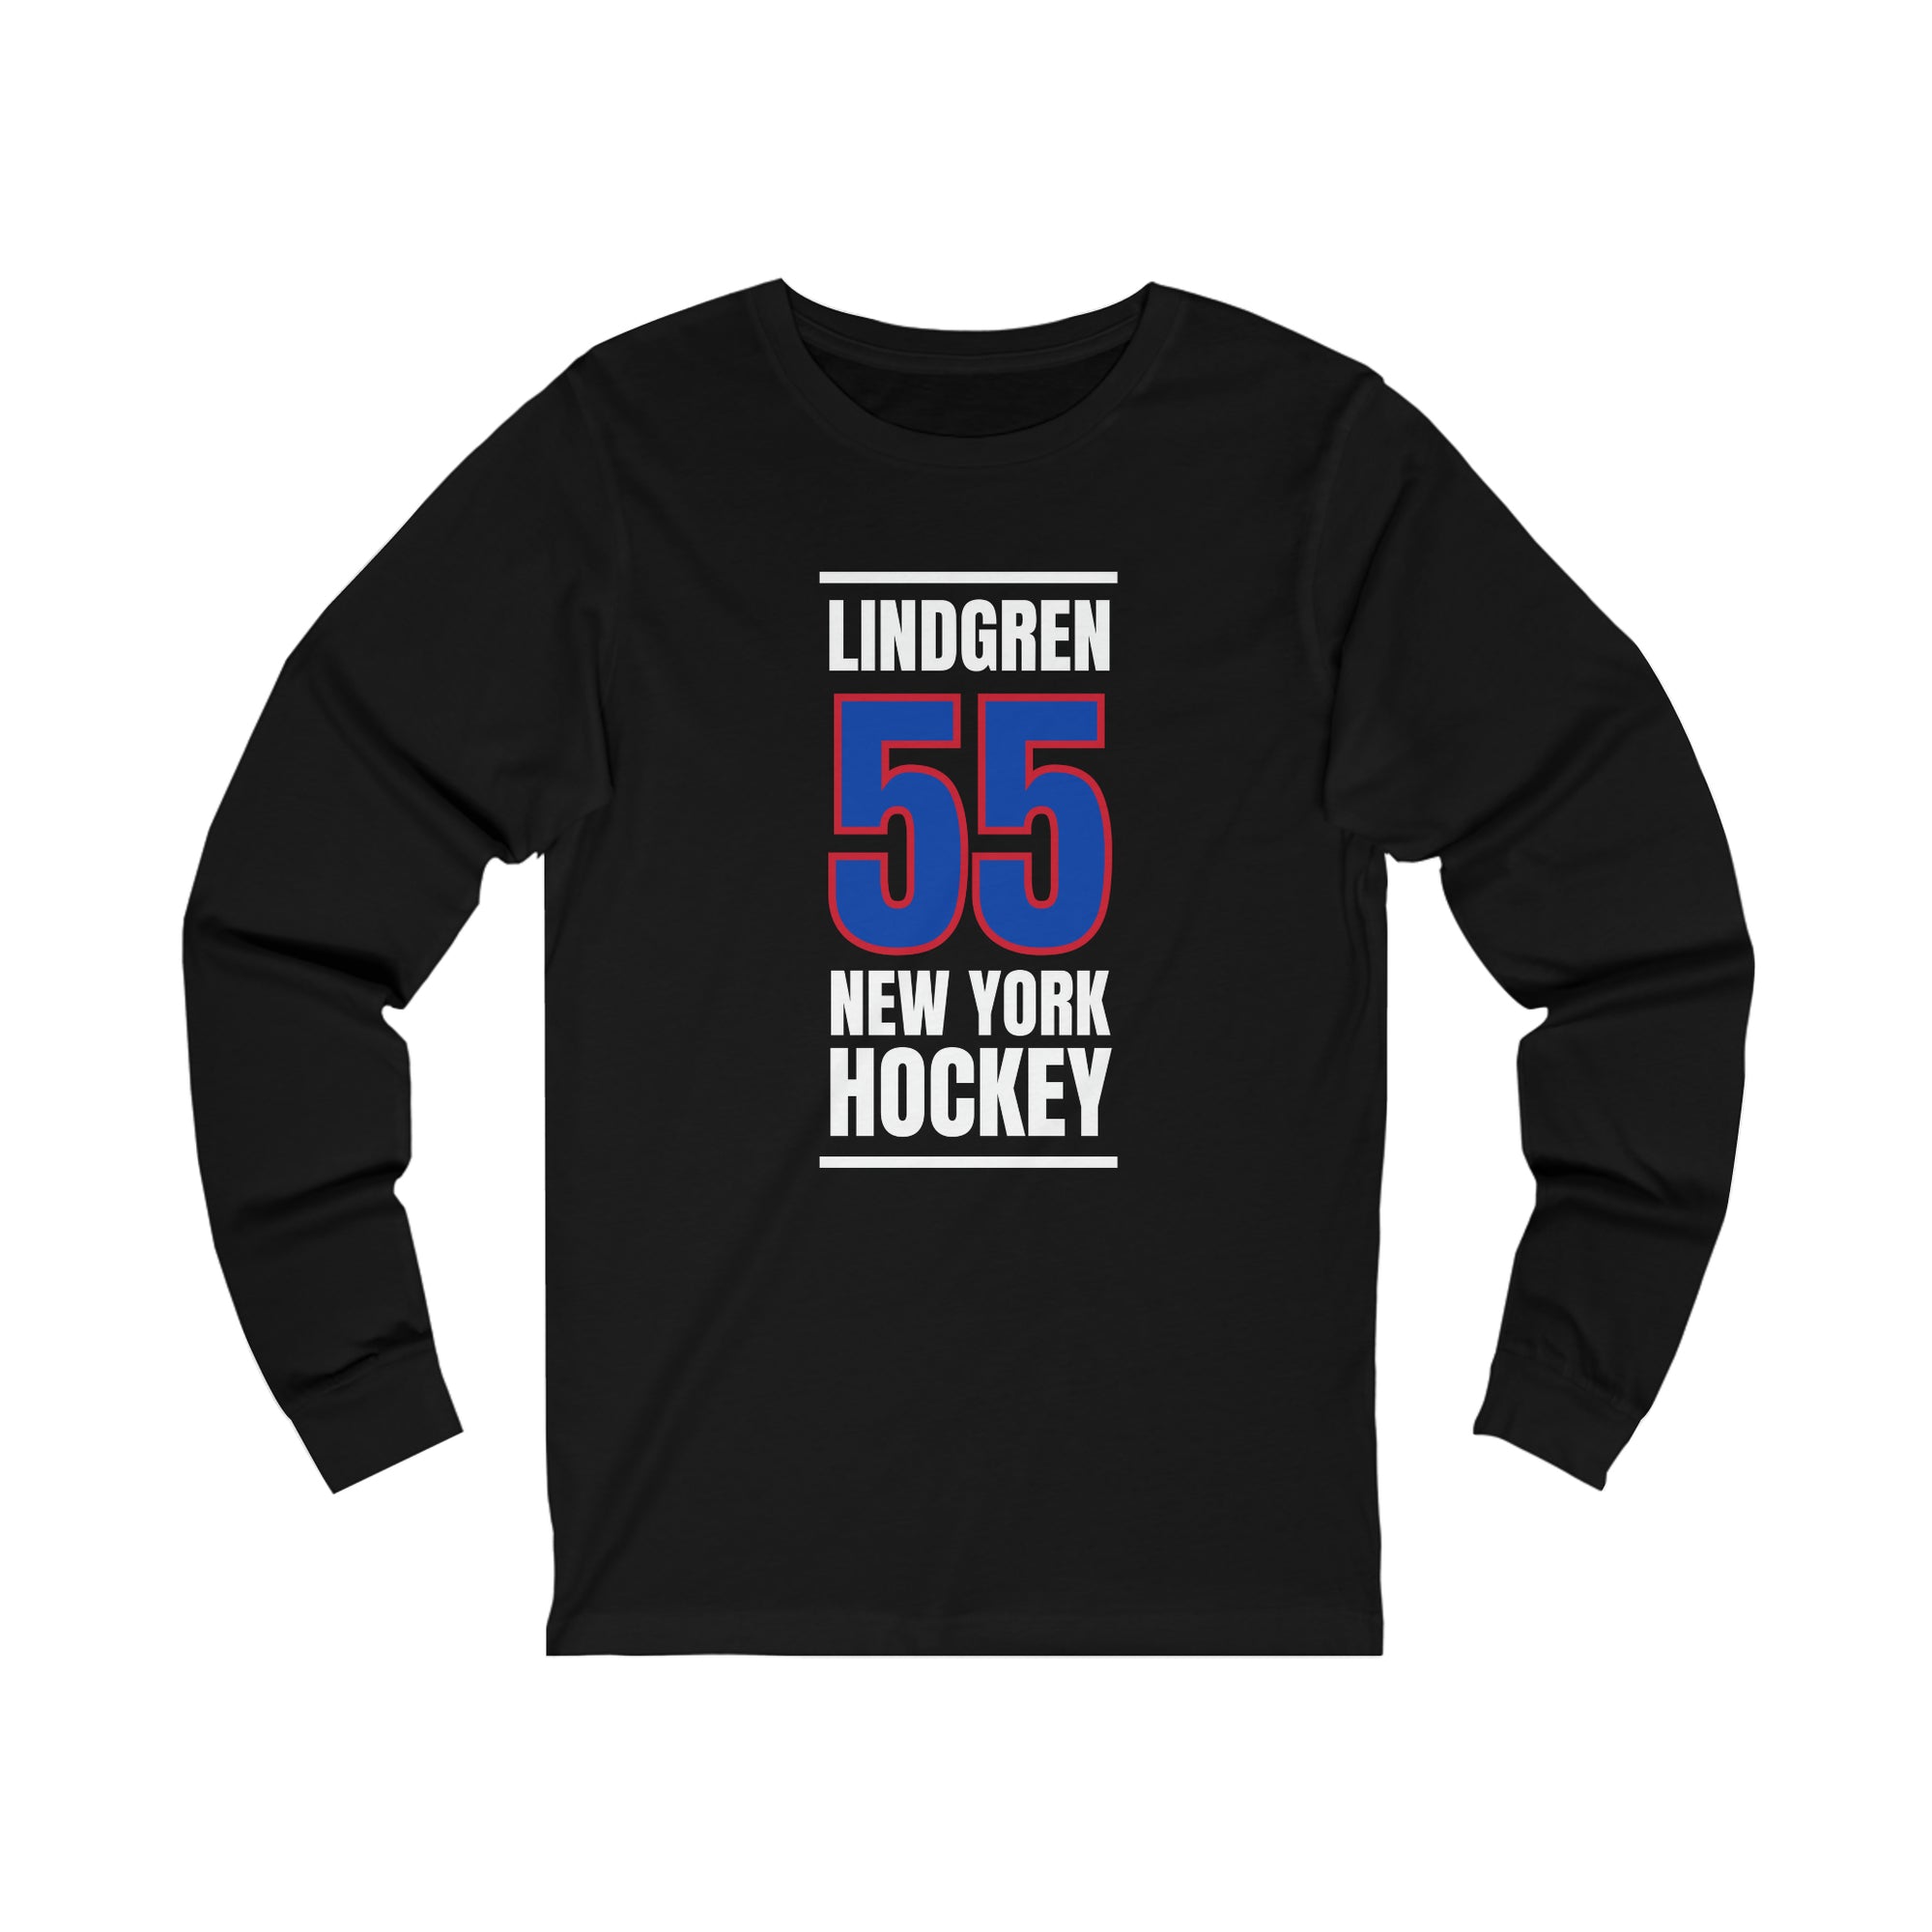 Lindgren 55 New York Hockey Royal Blue Vertical Design Unisex Jersey Long Sleeve Shirt